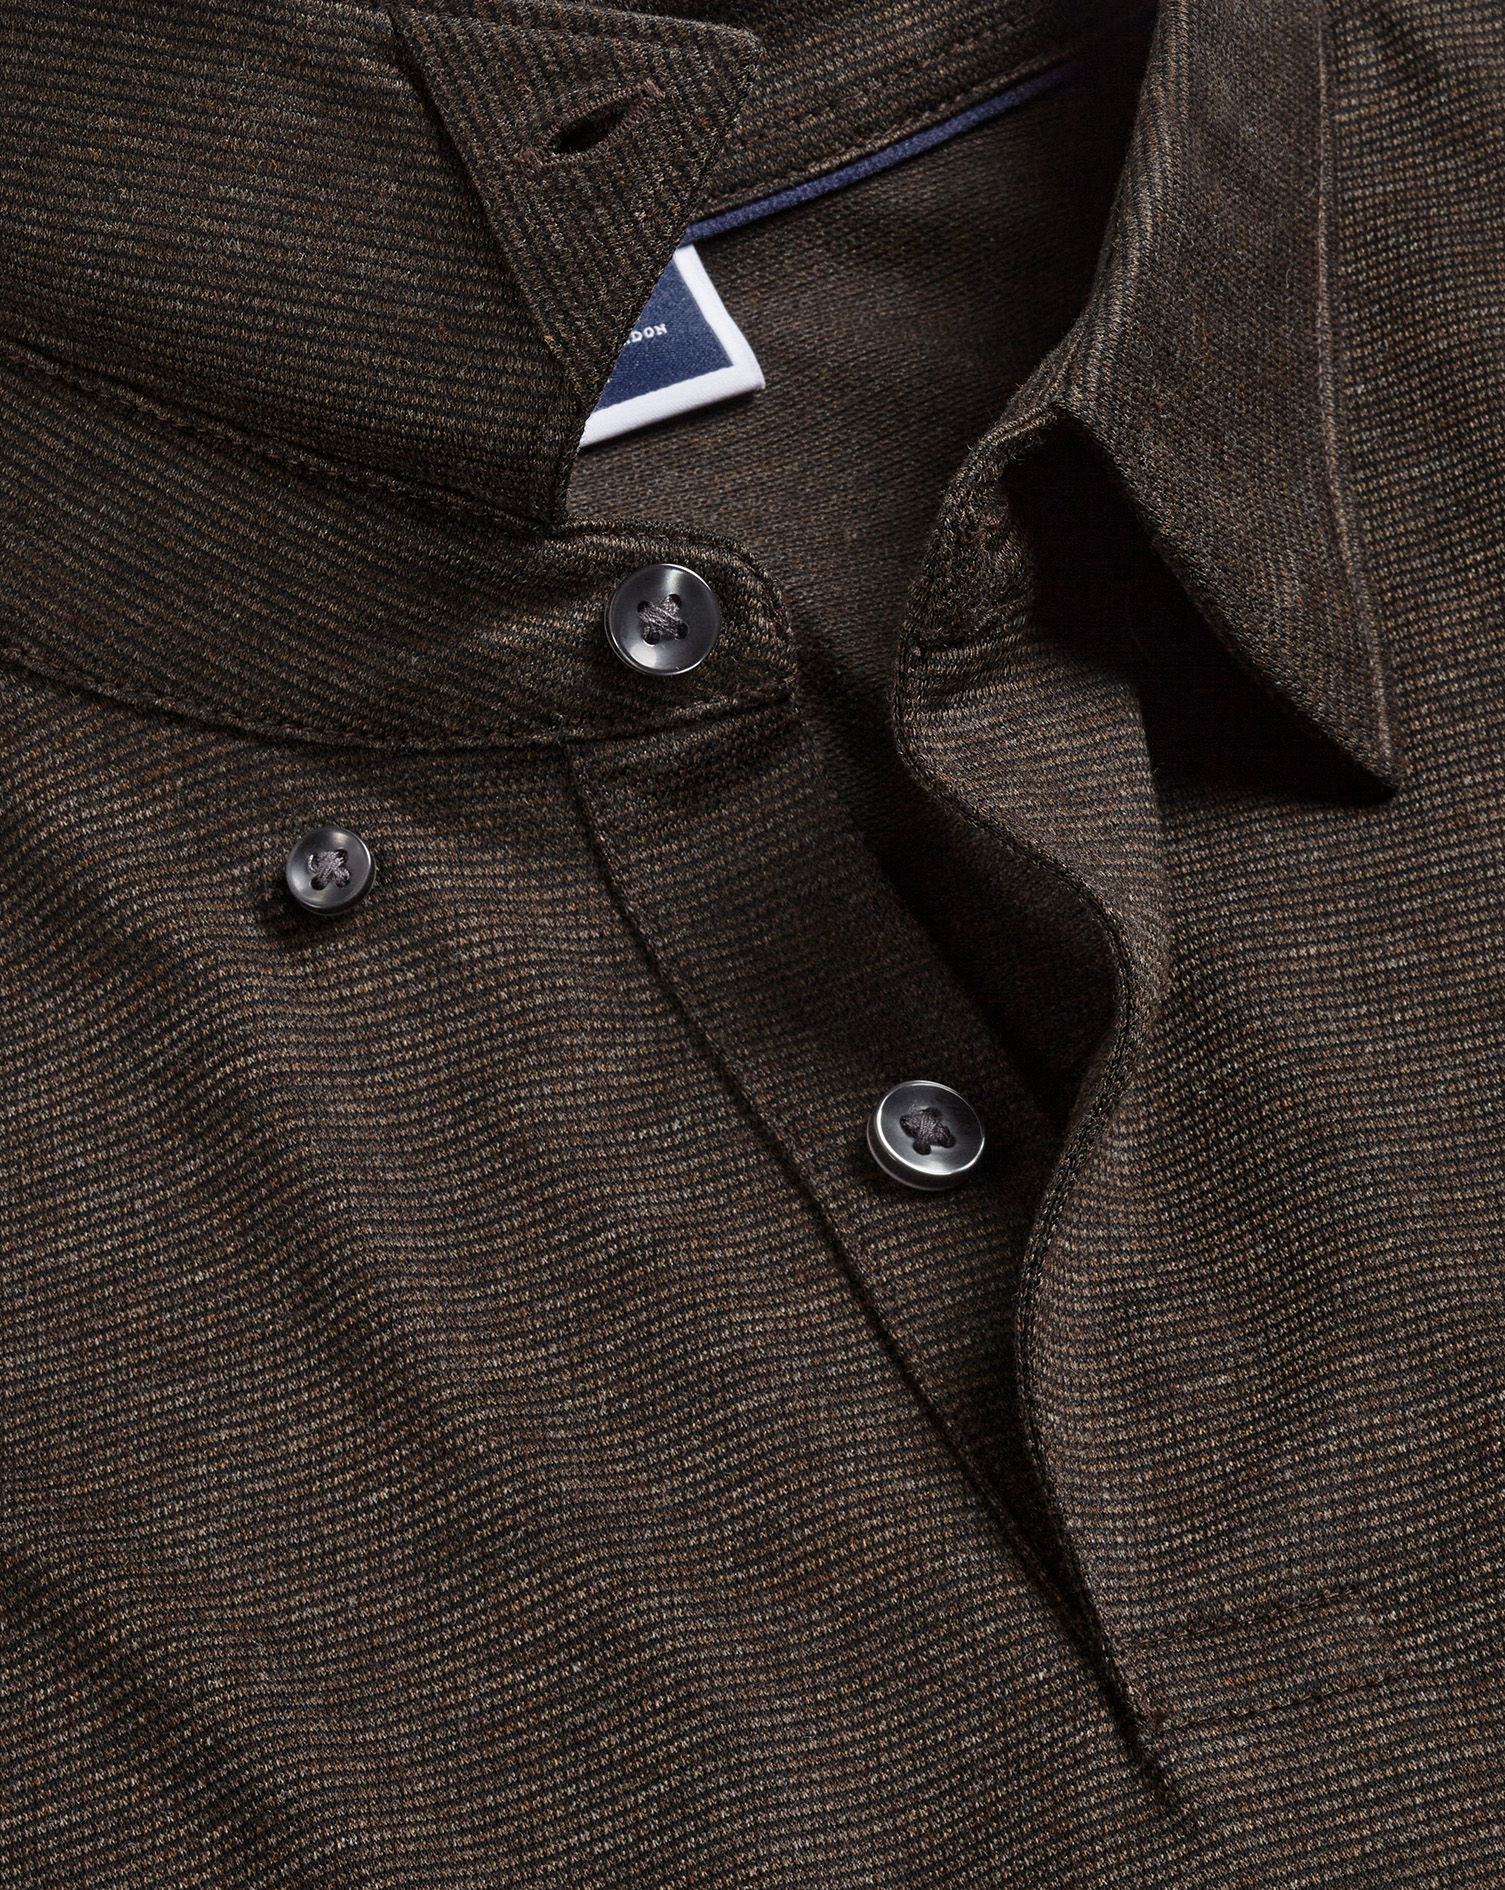 Men's Charles Tyrwhitt Birdseye Stripe Jacquard Polo Shirt - Chocolate Brown Size XXXL Cotton
